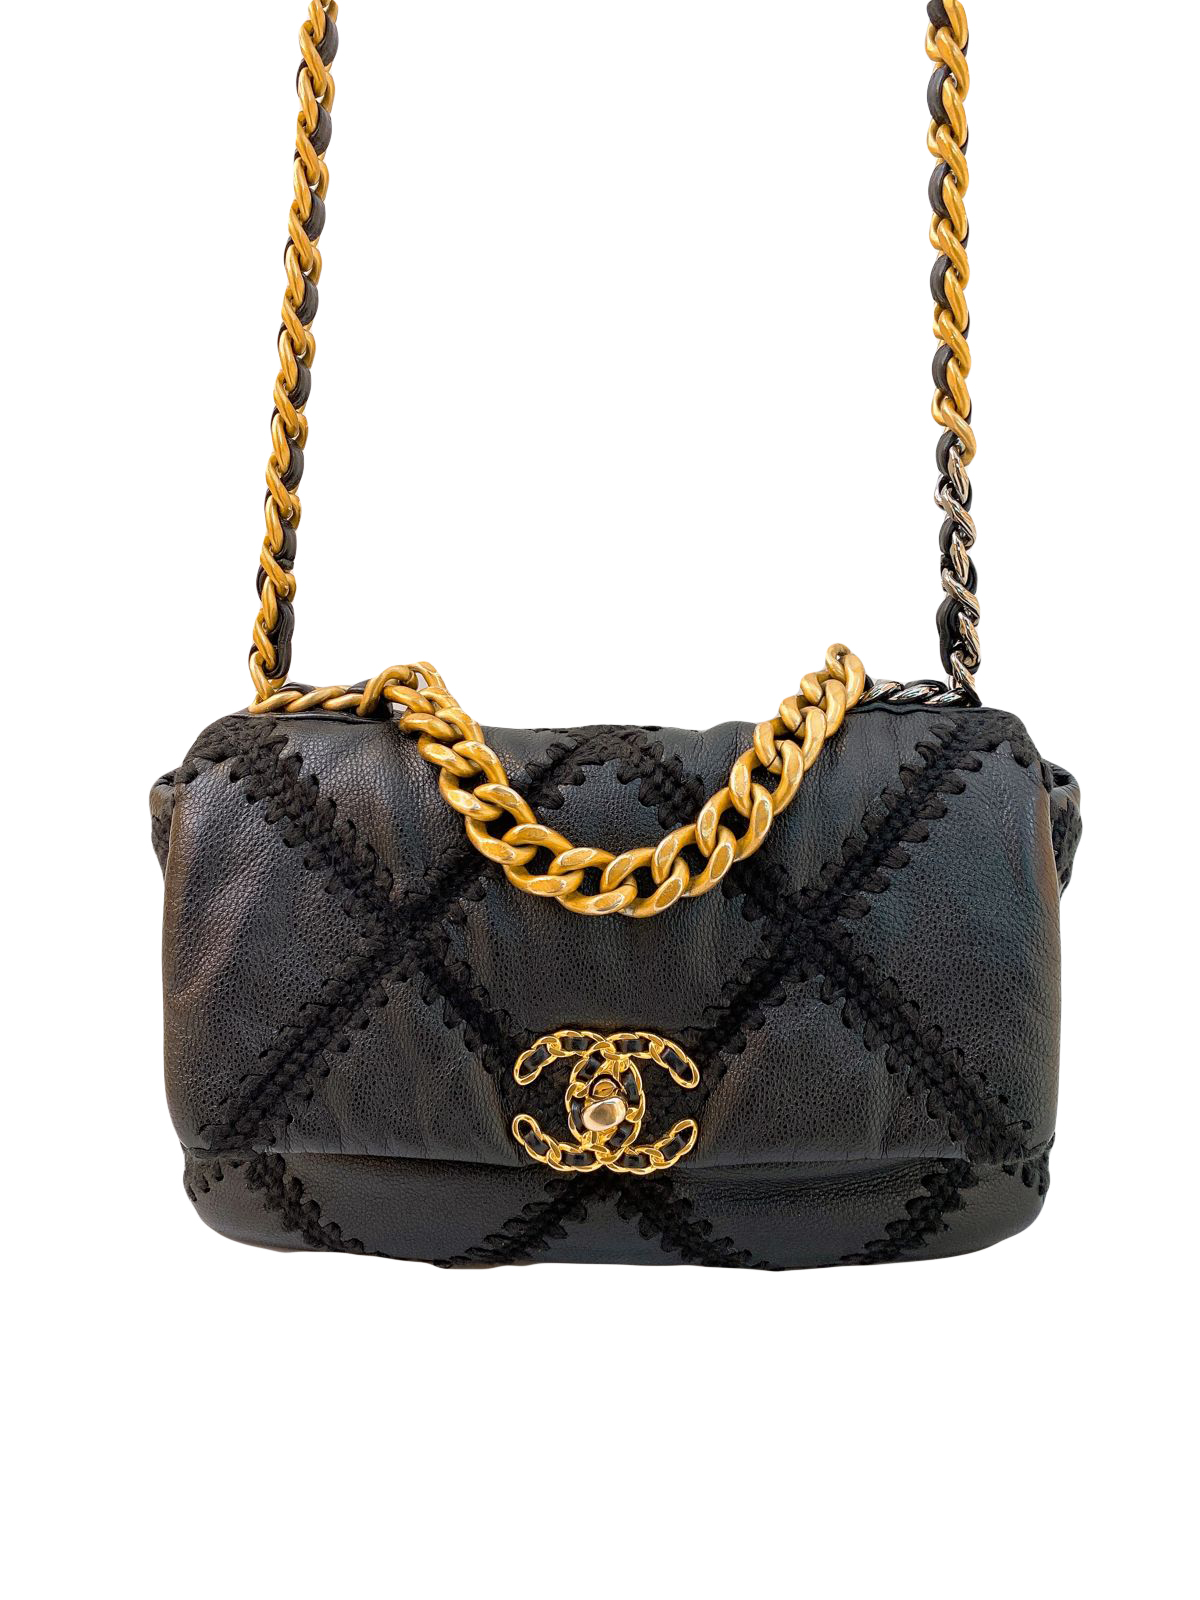 Chanel 19 leather handbag Chanel Black in Leather - 36645293